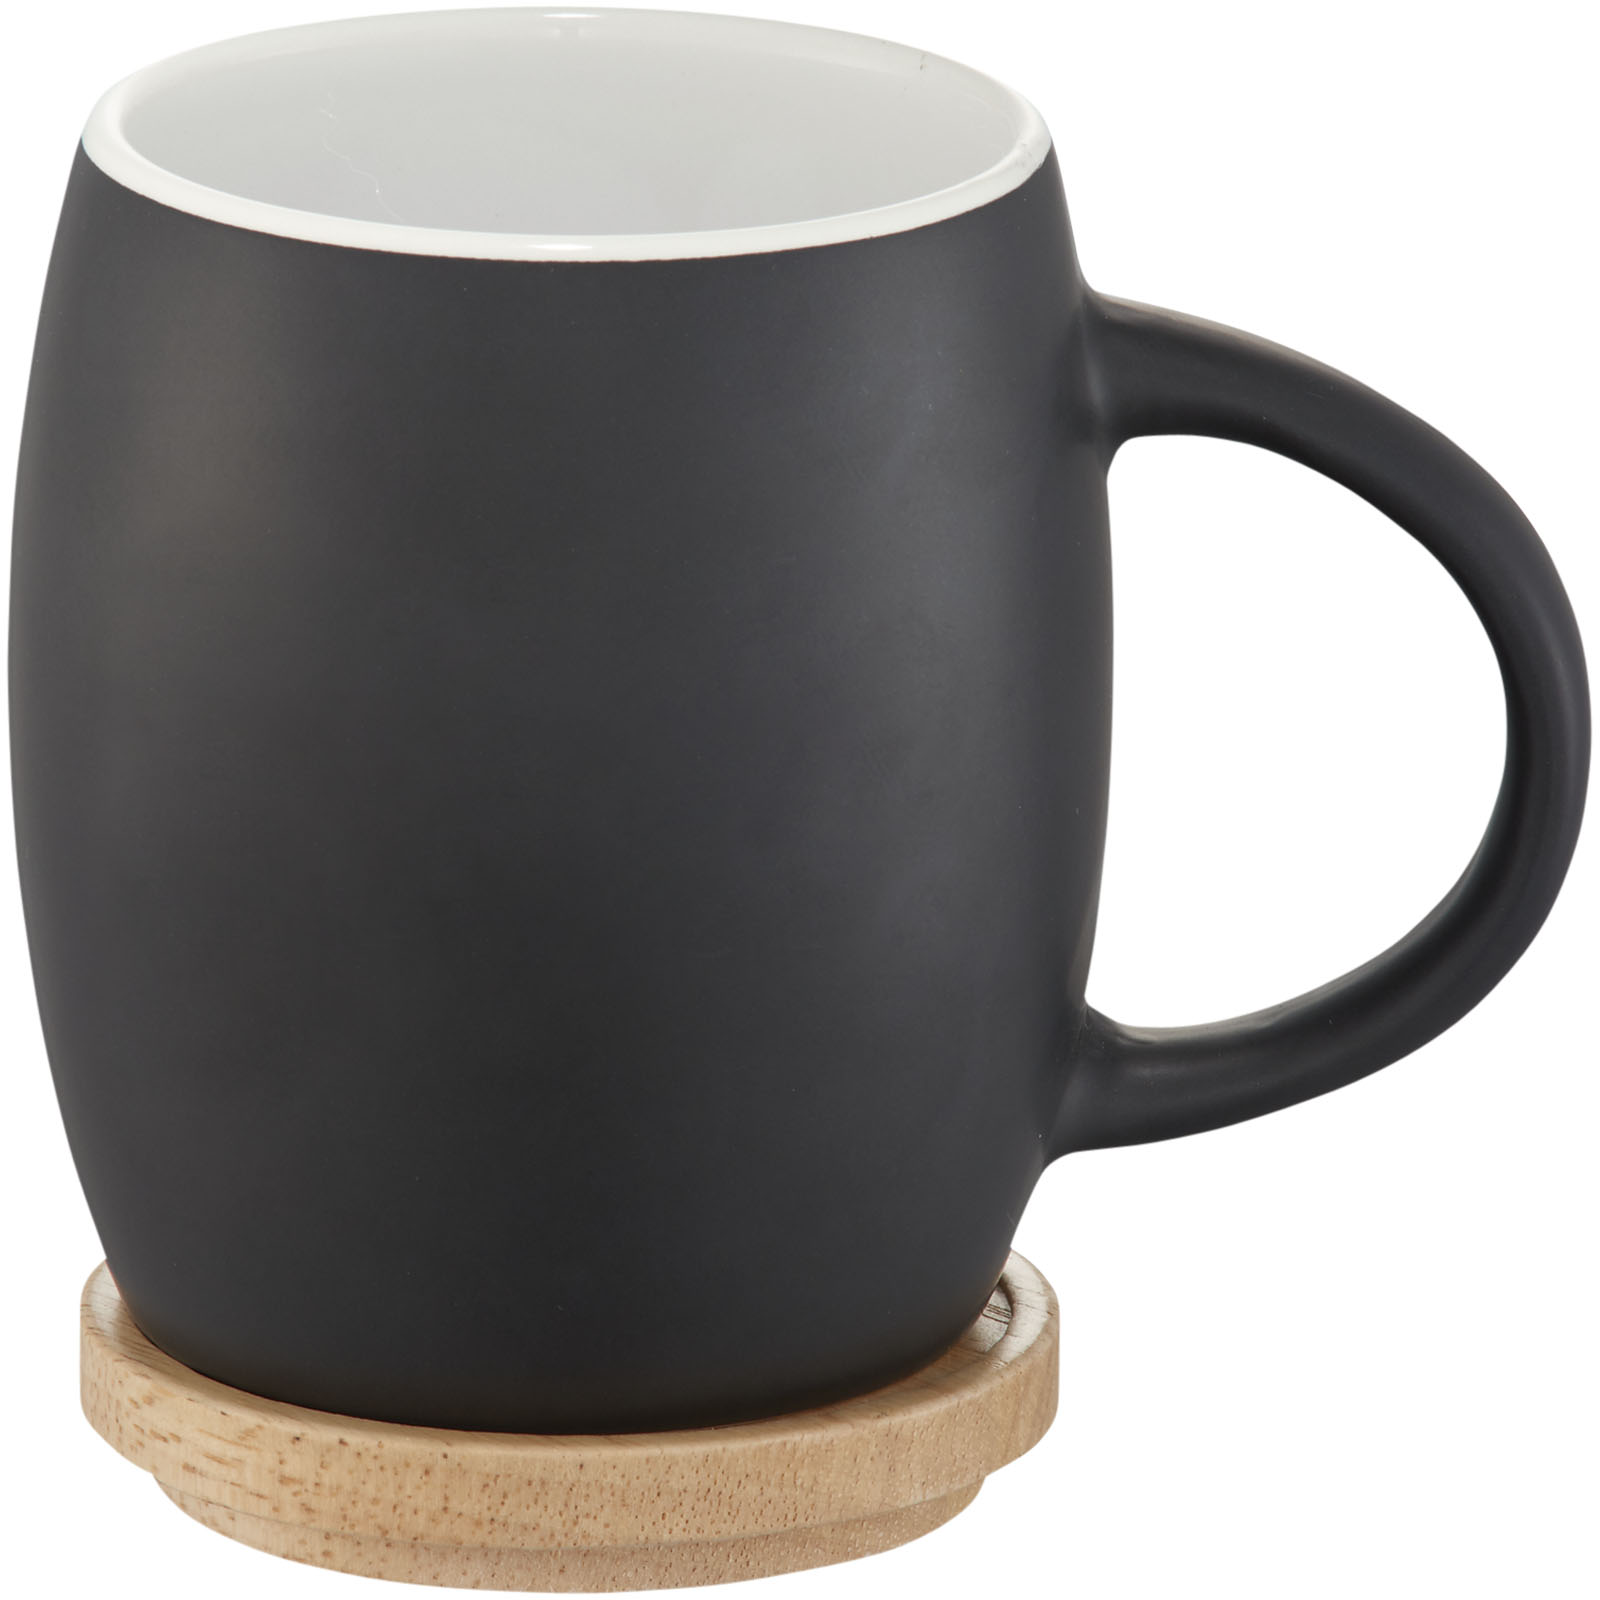 Standard mugs - Hearth 400 ml ceramic mug with wooden coaster